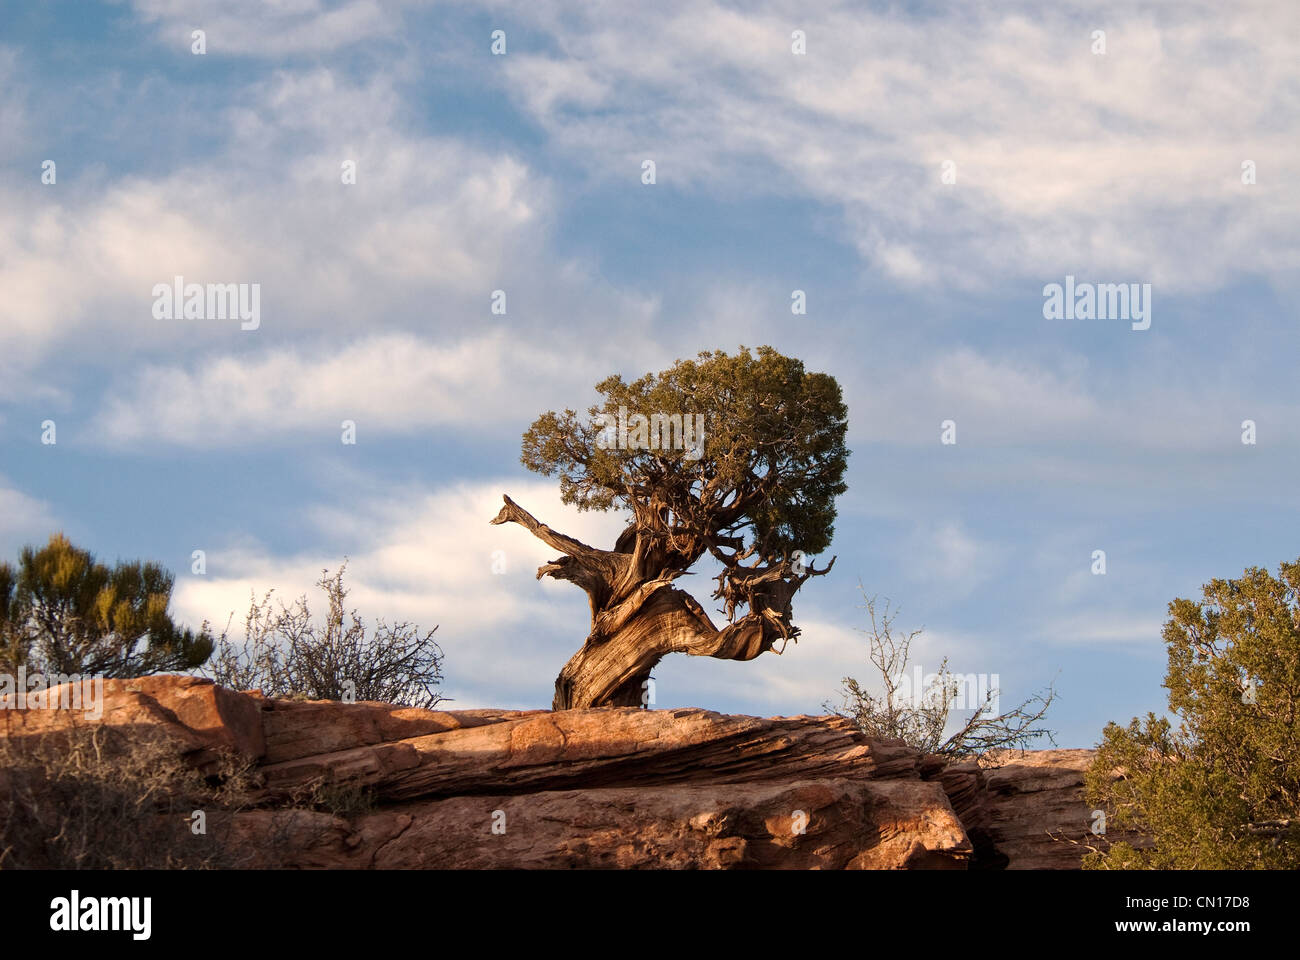 Utah-Wacholder-Juniperus Osteosperma Dead Horse Point State Park Utah USA Stockfoto